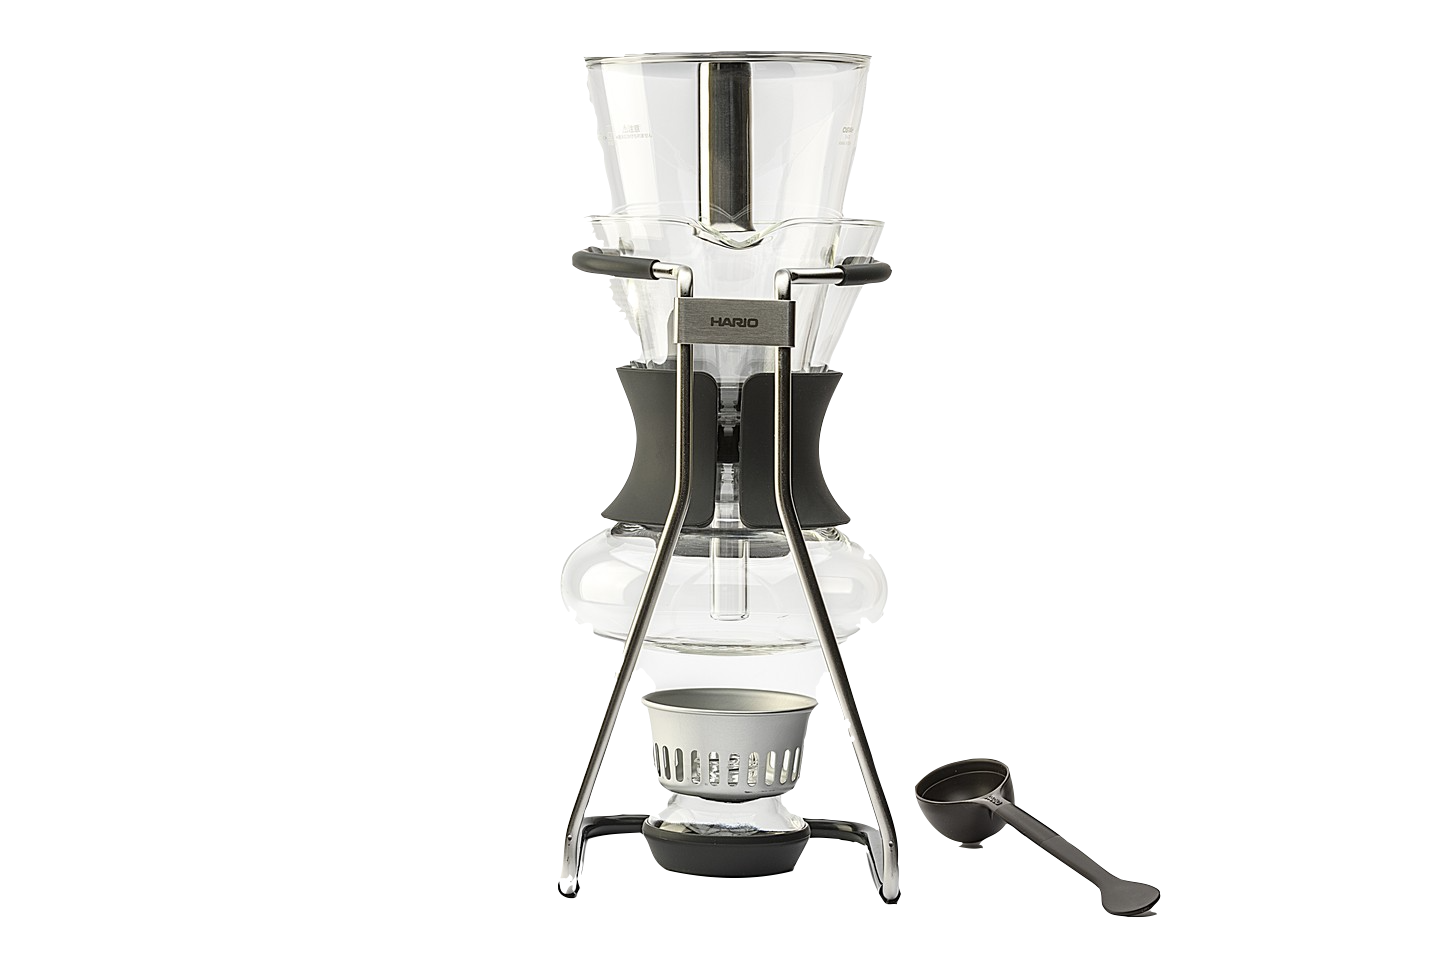 Hario HarioSommelier Syphon Coffee Maker SCA-5 for sale online 